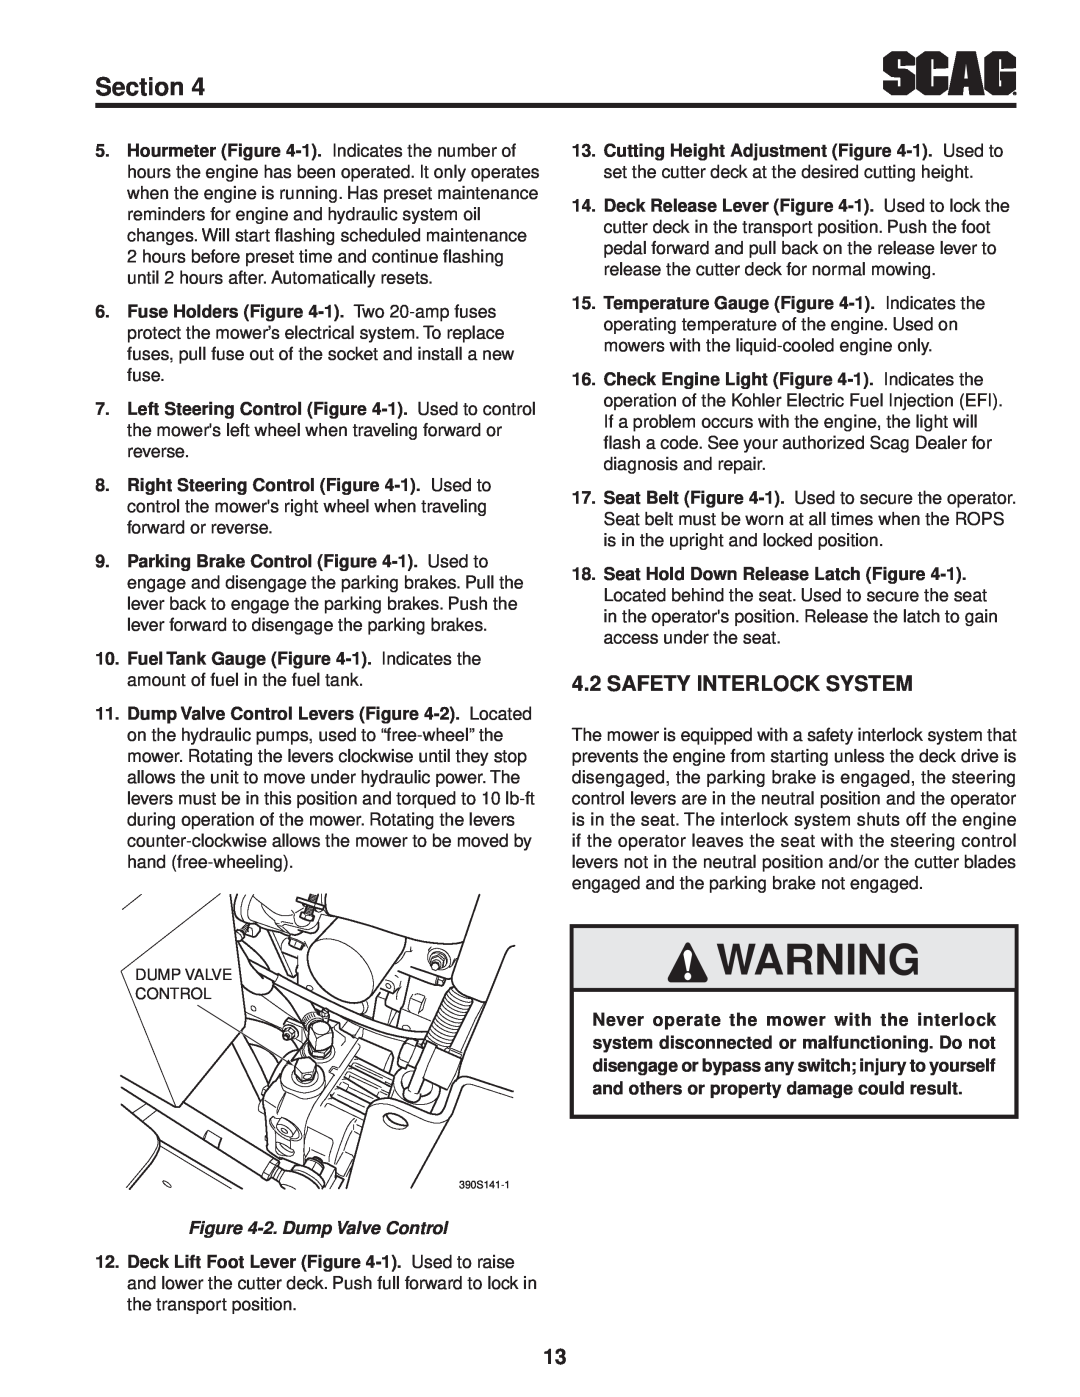 Scag Power Equipment STT61V-31EFI-SS manual Safety Interlock System, Section, 2. Dump Valve Control 